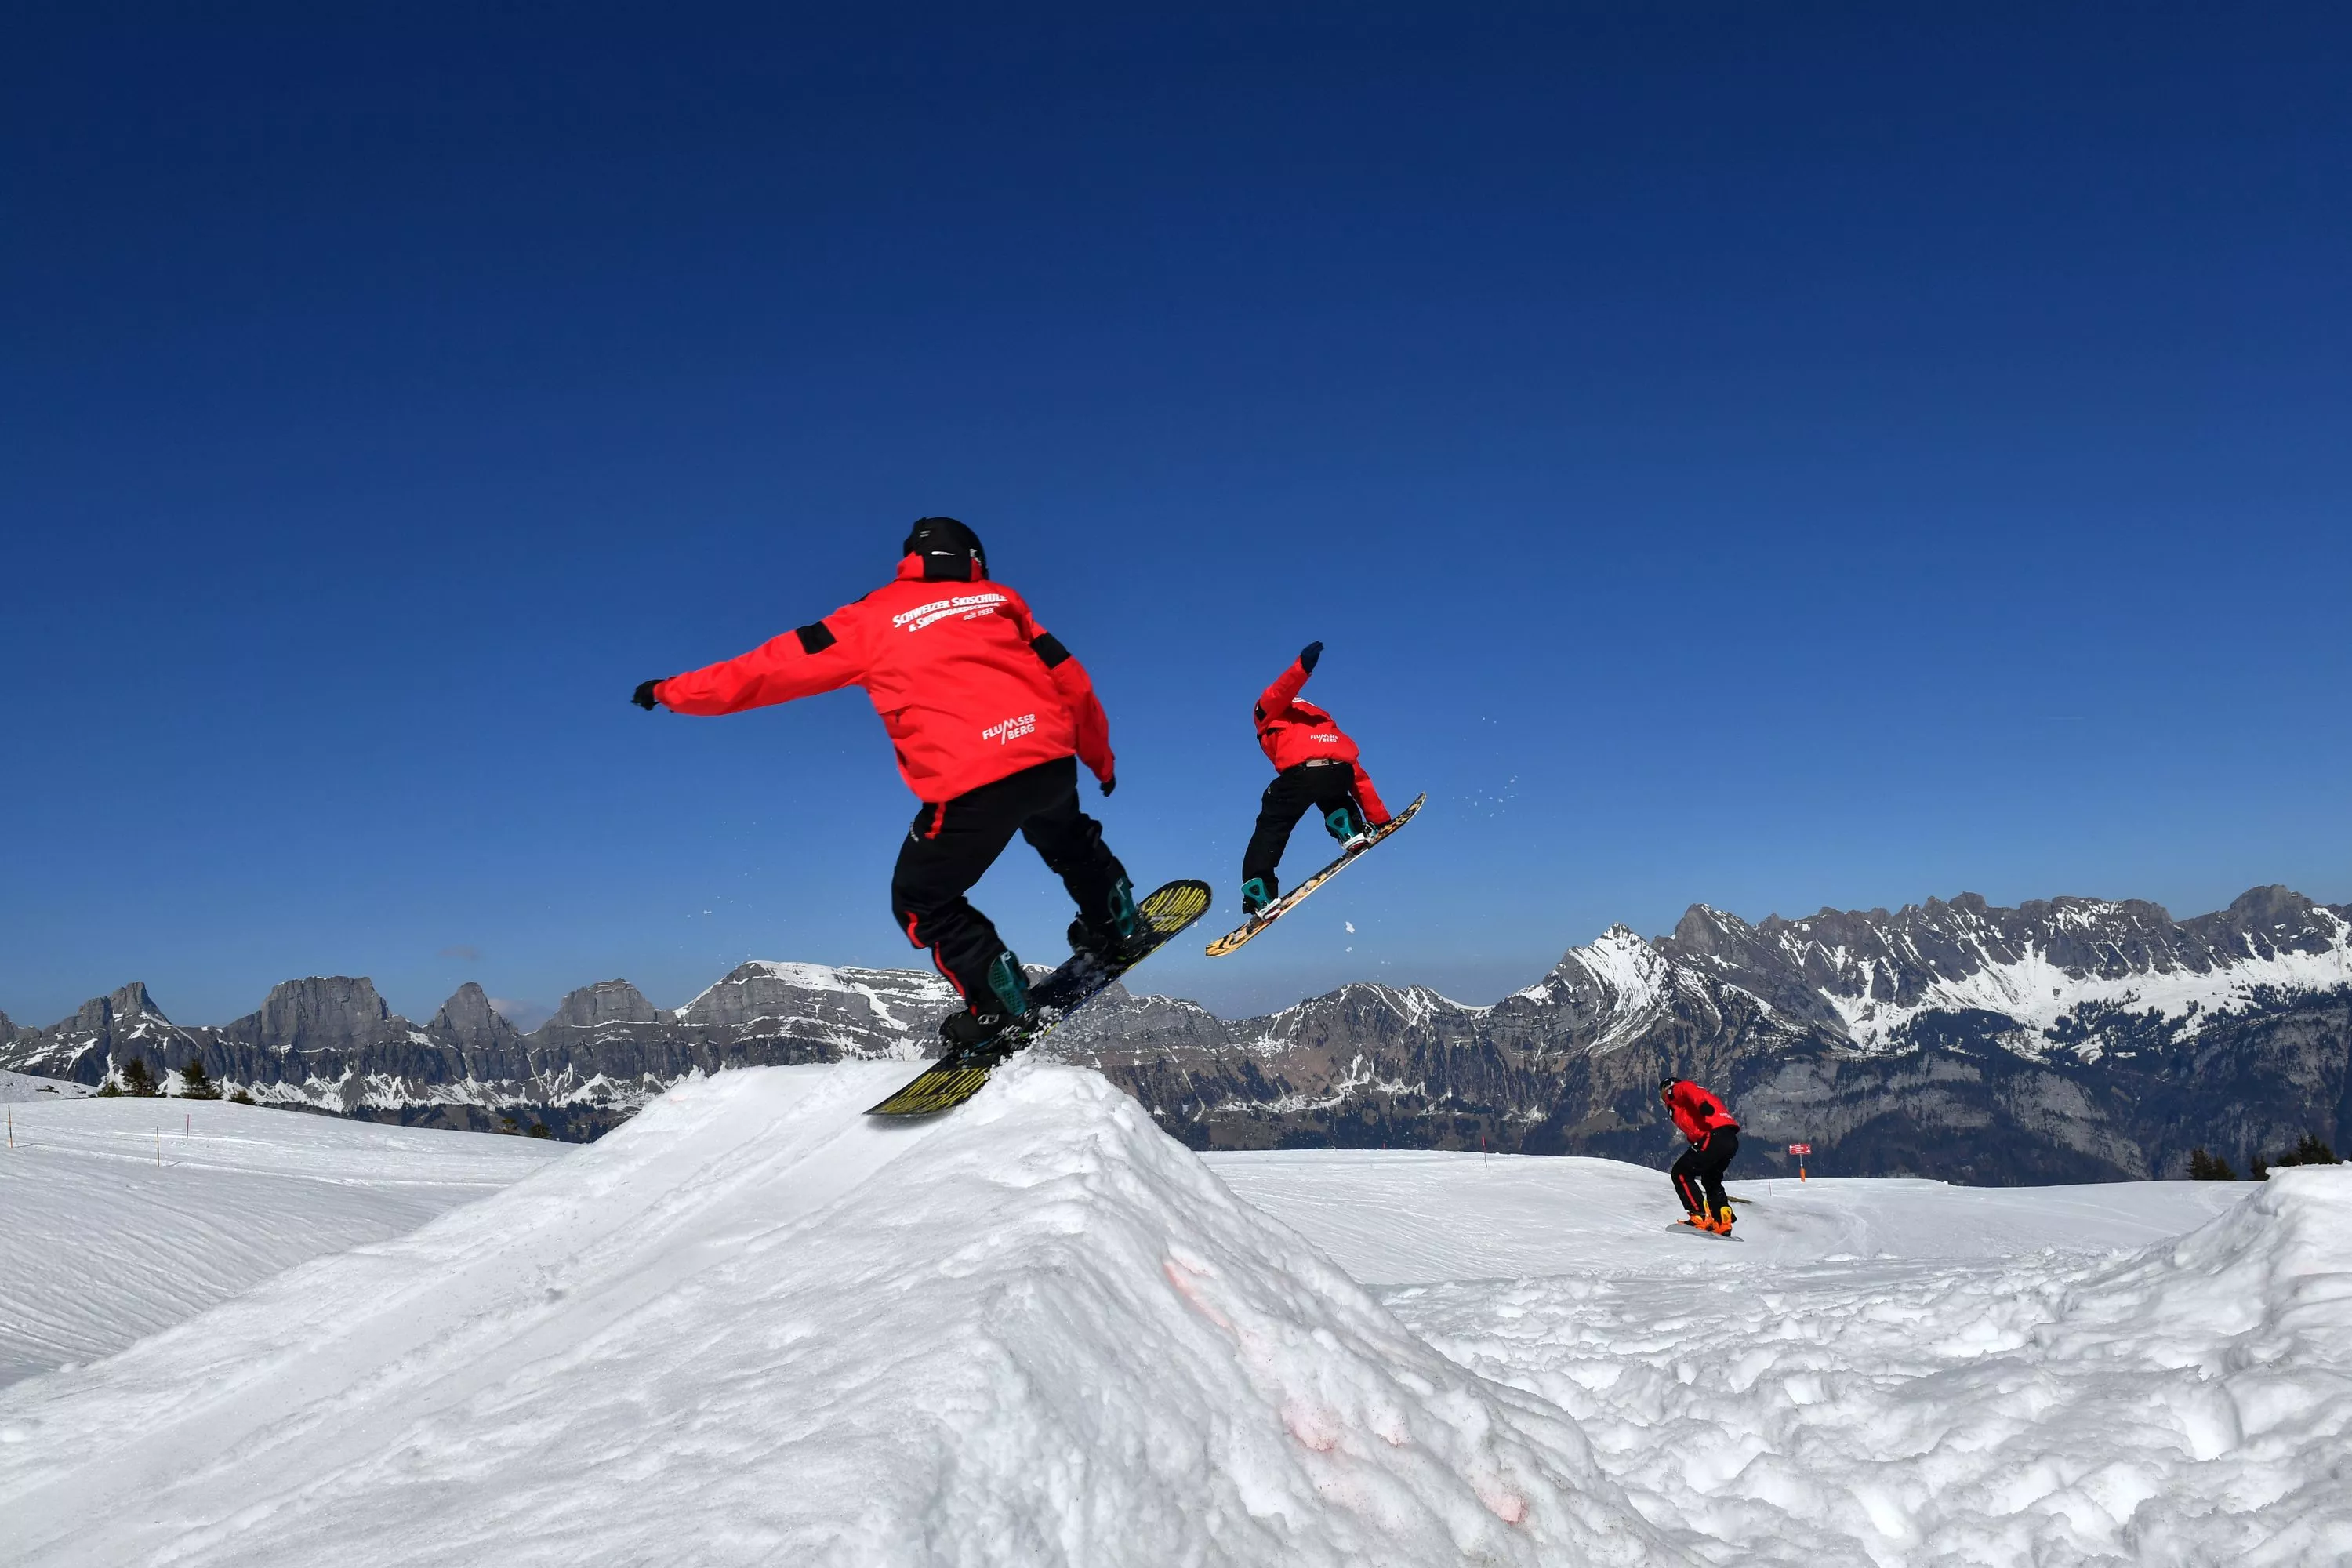 Intersport Flumserberg in Switzerland, Europe | Snowboarding,Skiing - Rated 0.9